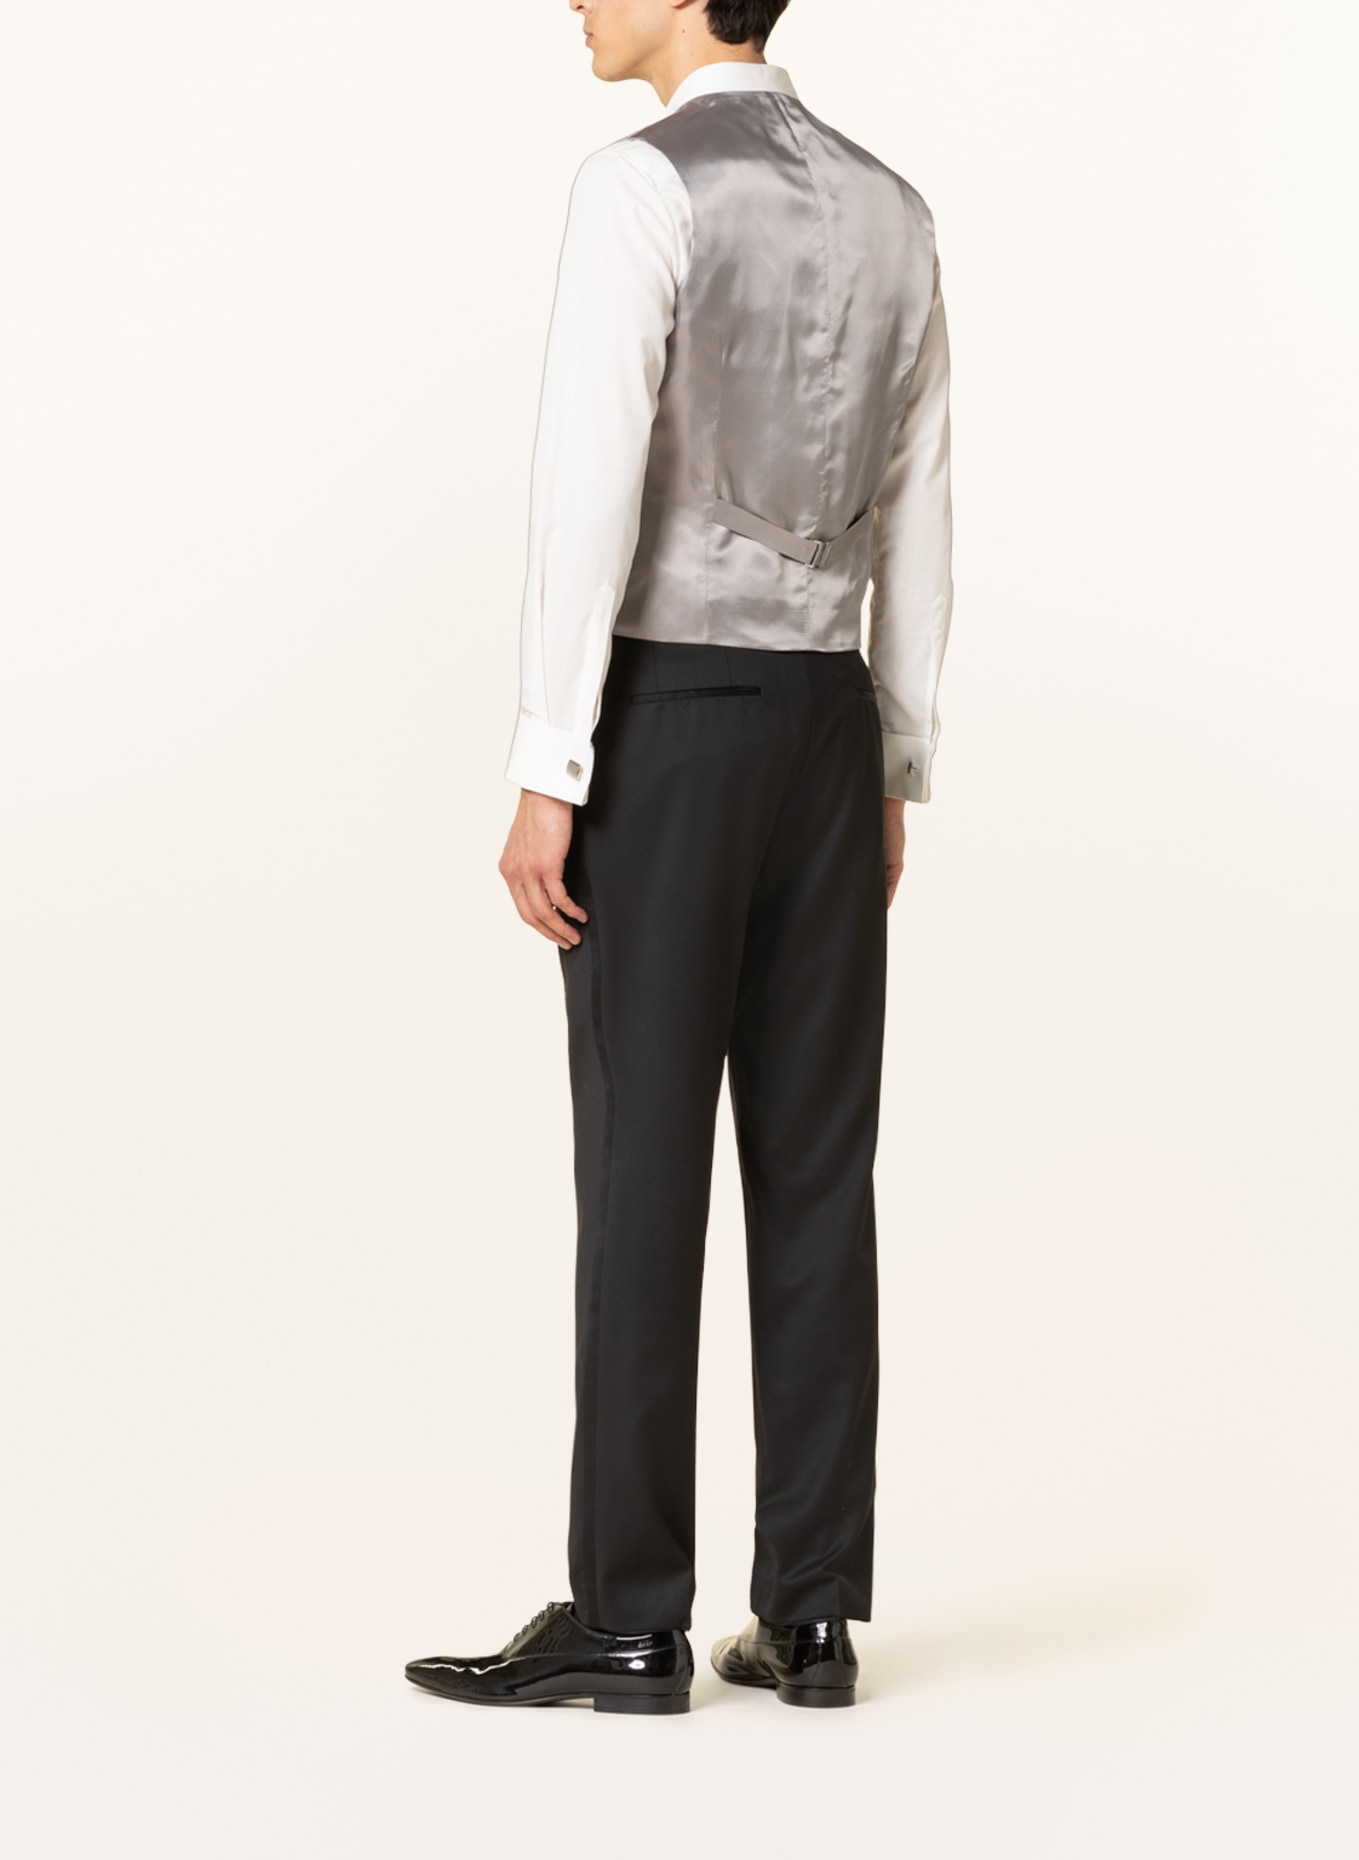 WILVORST Suit vest slim fit, Color: TAUPE/ LIGHT GRAY/ GRAY (Image 3)